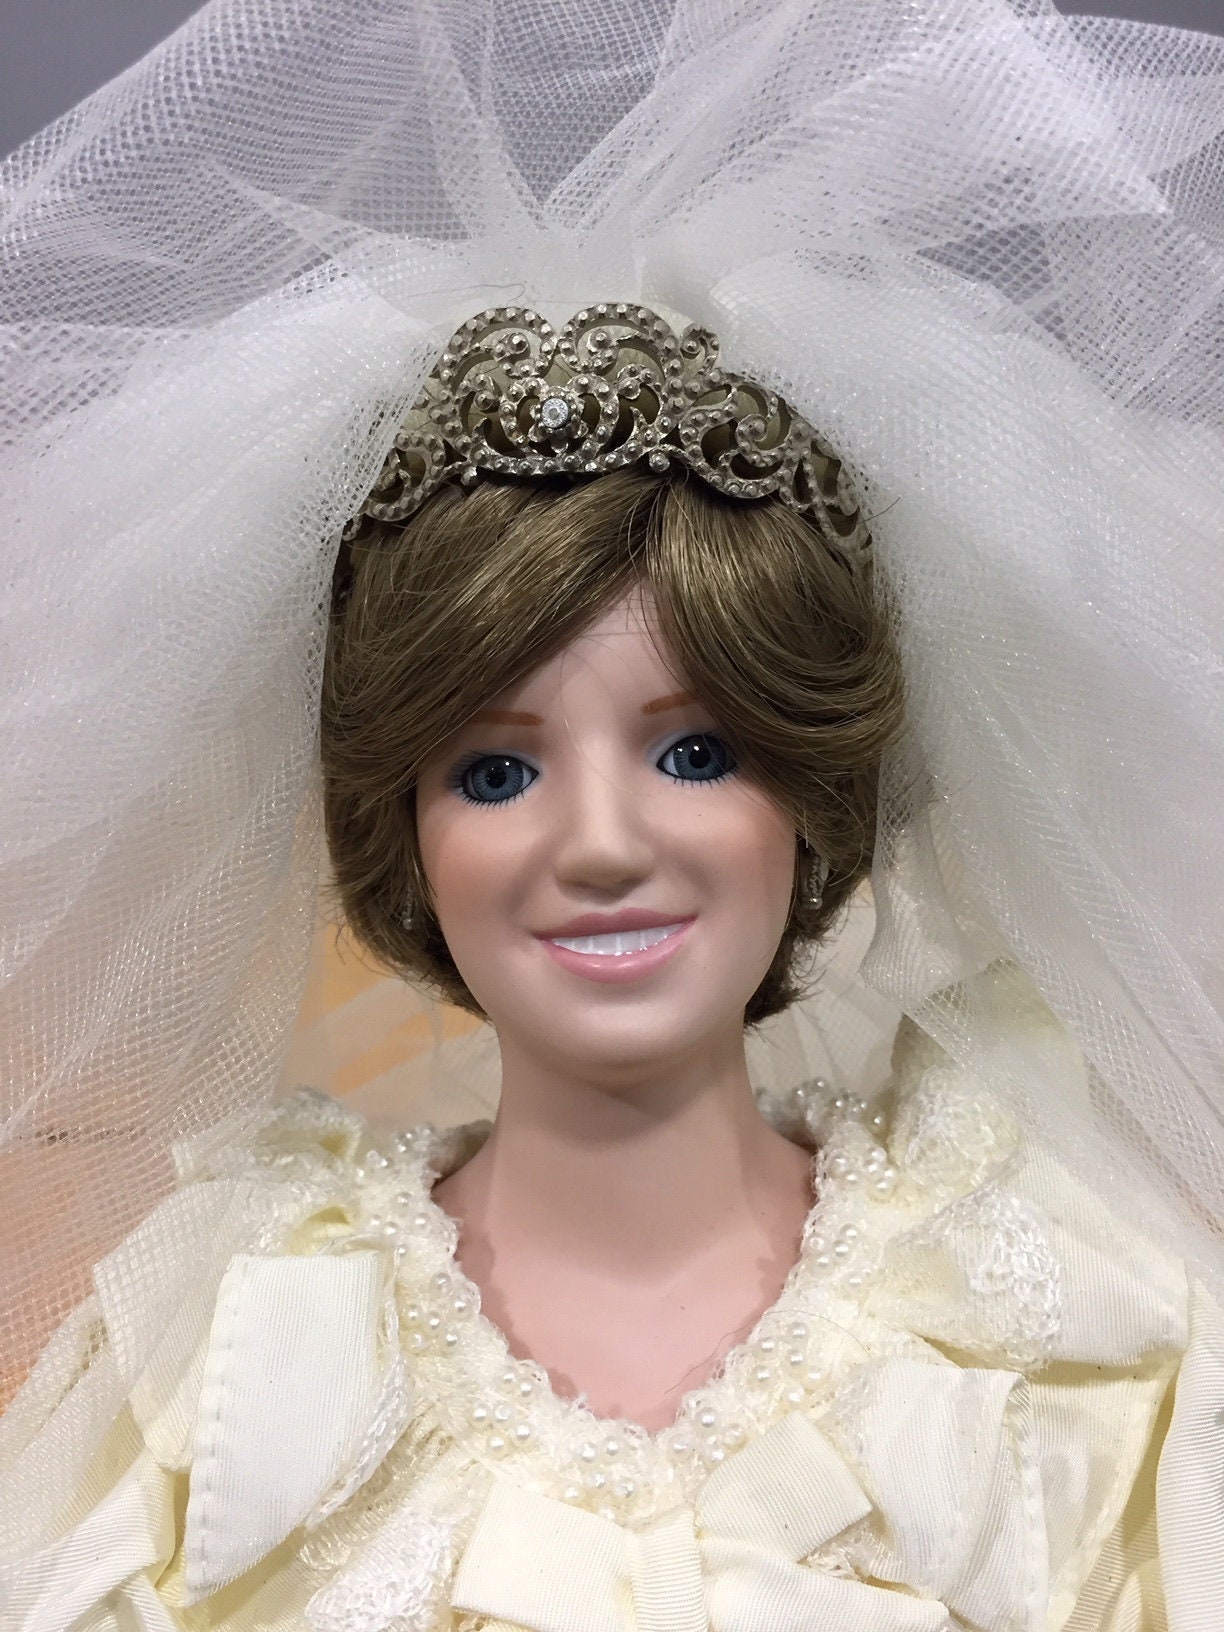 Купить куклу невесту. Кукла невеста. Куклы в образе принцессы Дианы. Фарфор куклы невесты принцессы.